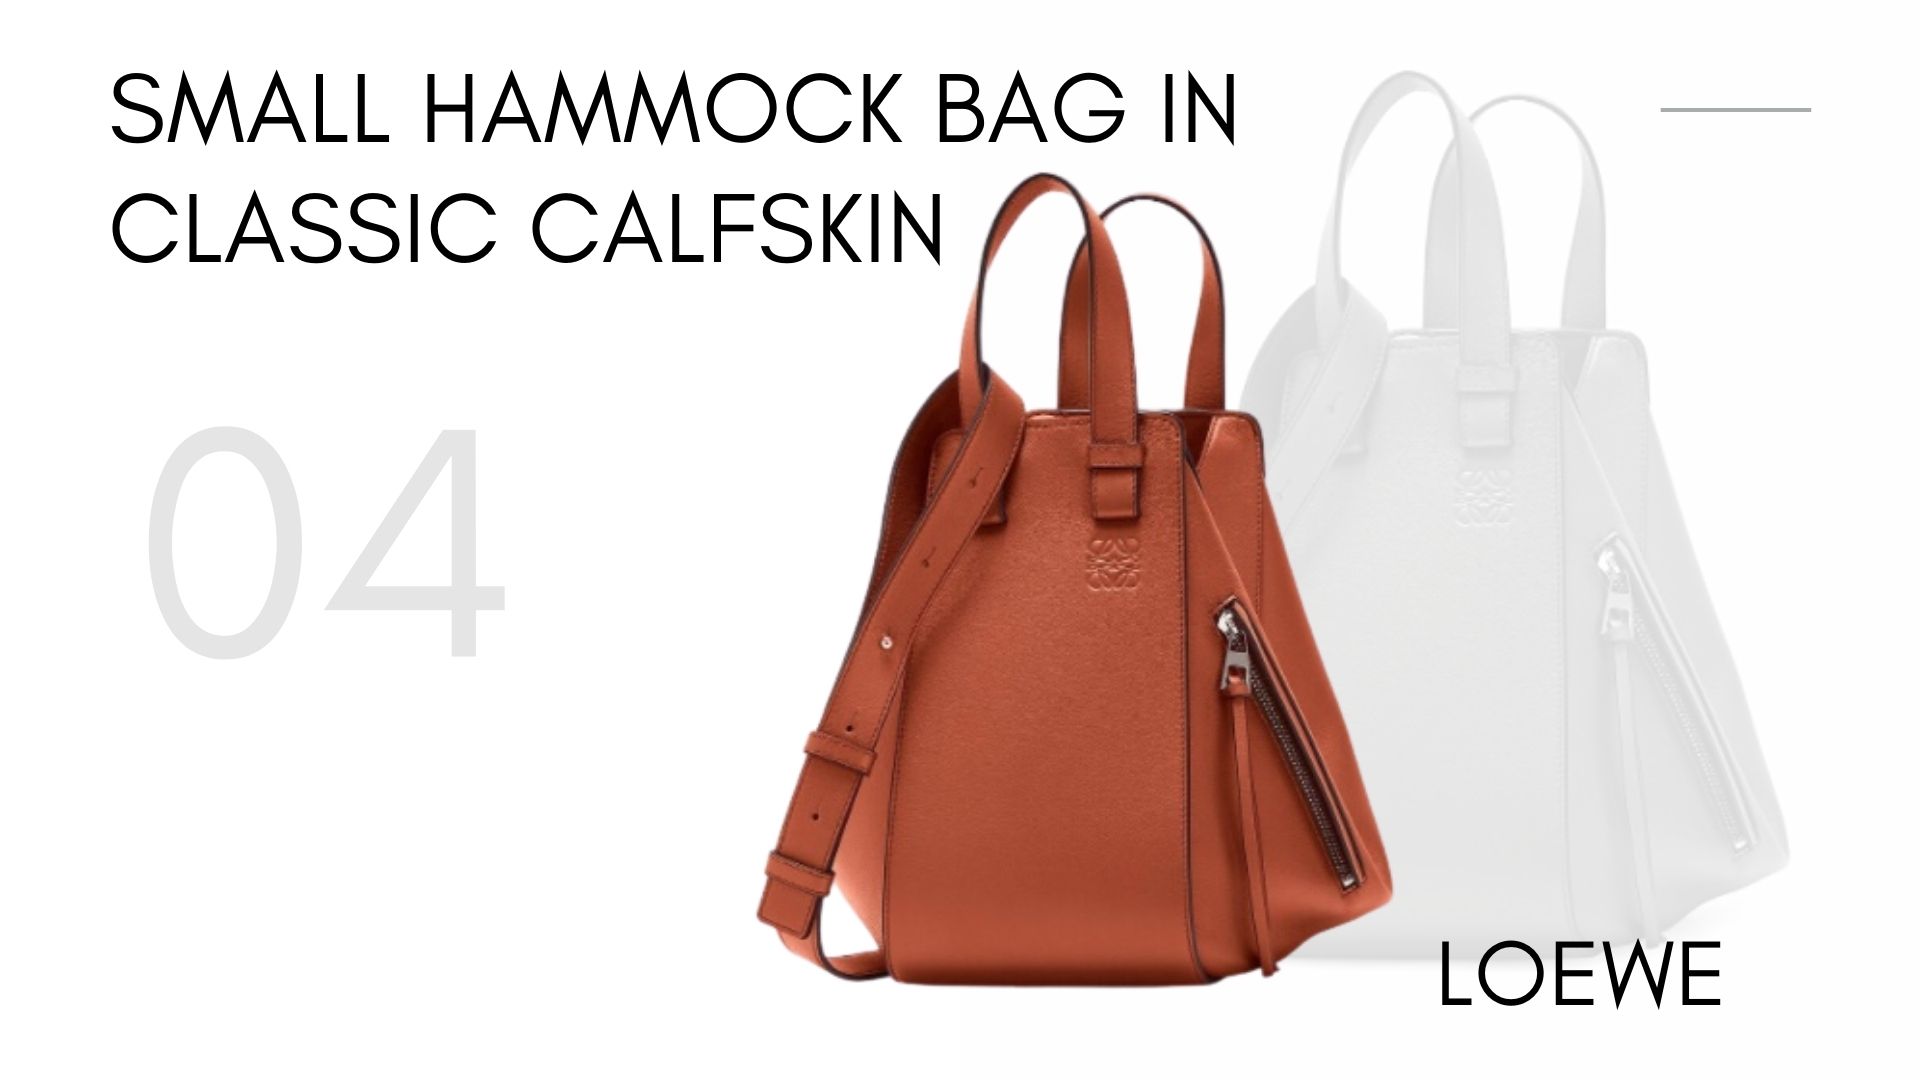 Small Hammock bag in classic calfskin - loewe